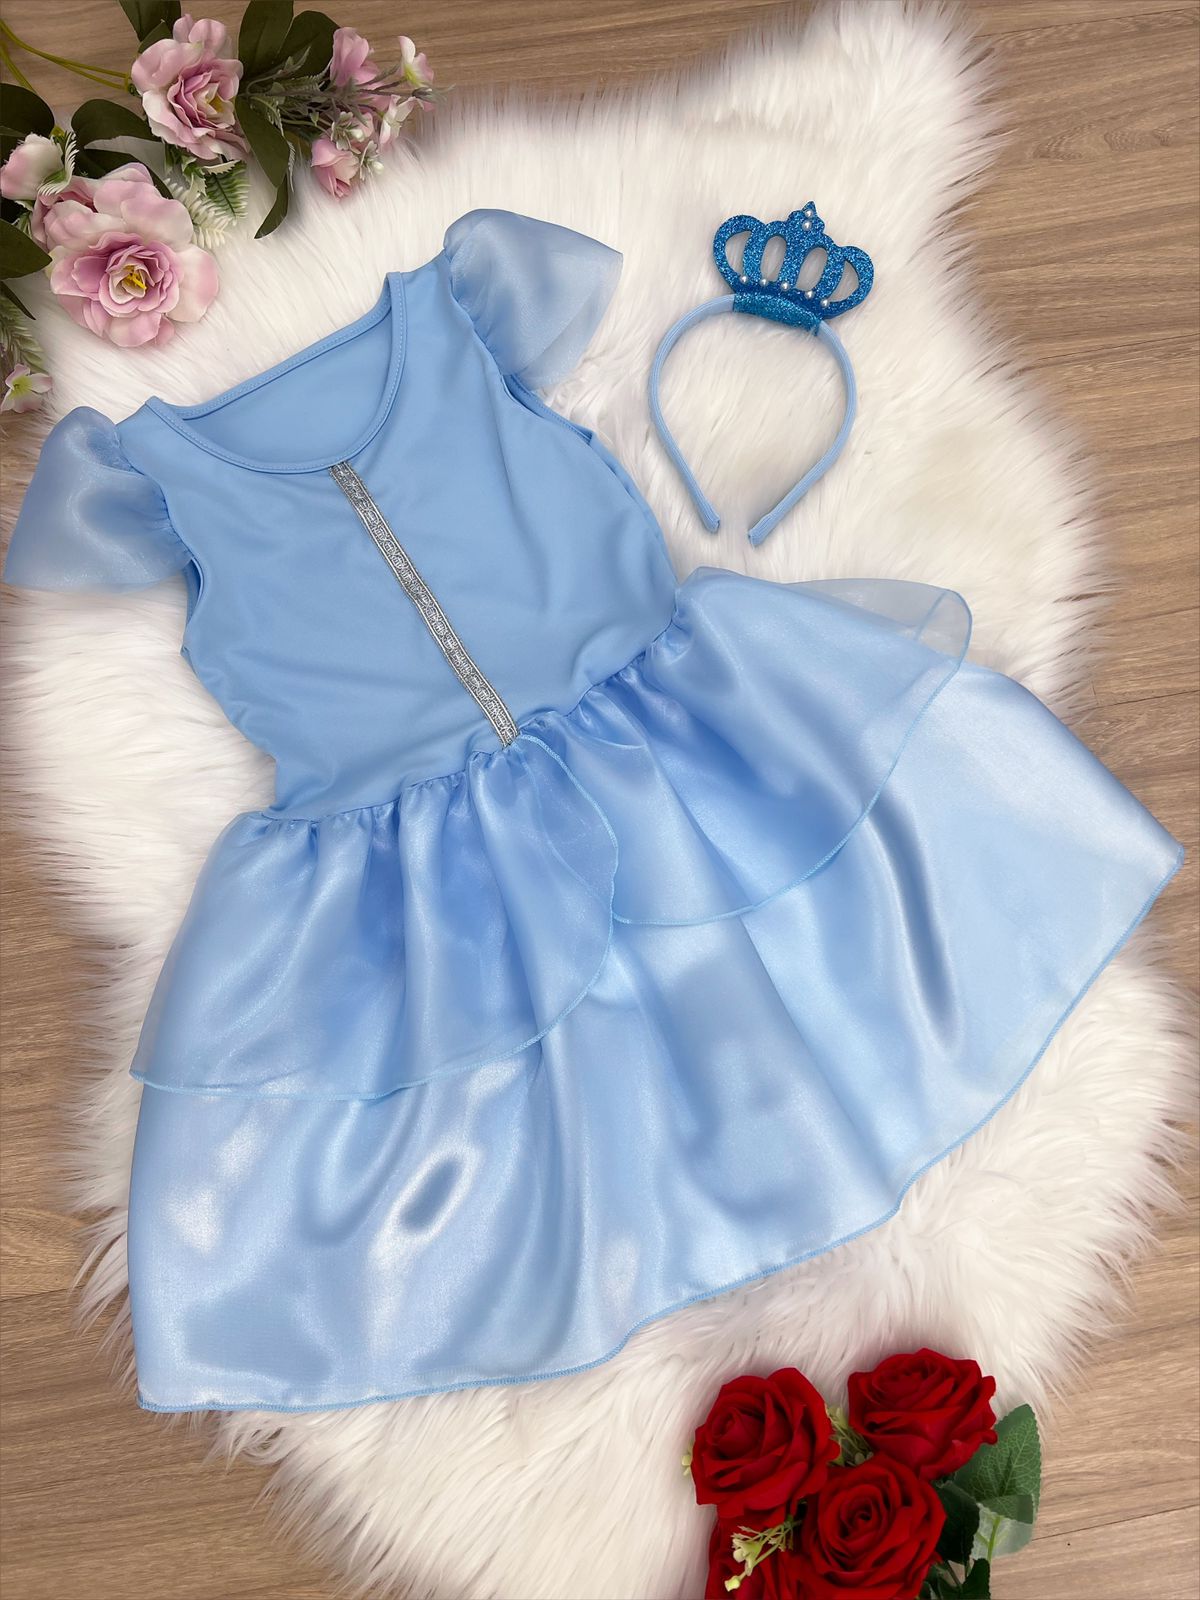 Fantasia Vestido Infantil Princesa Cinderela + Luvas + Coroa